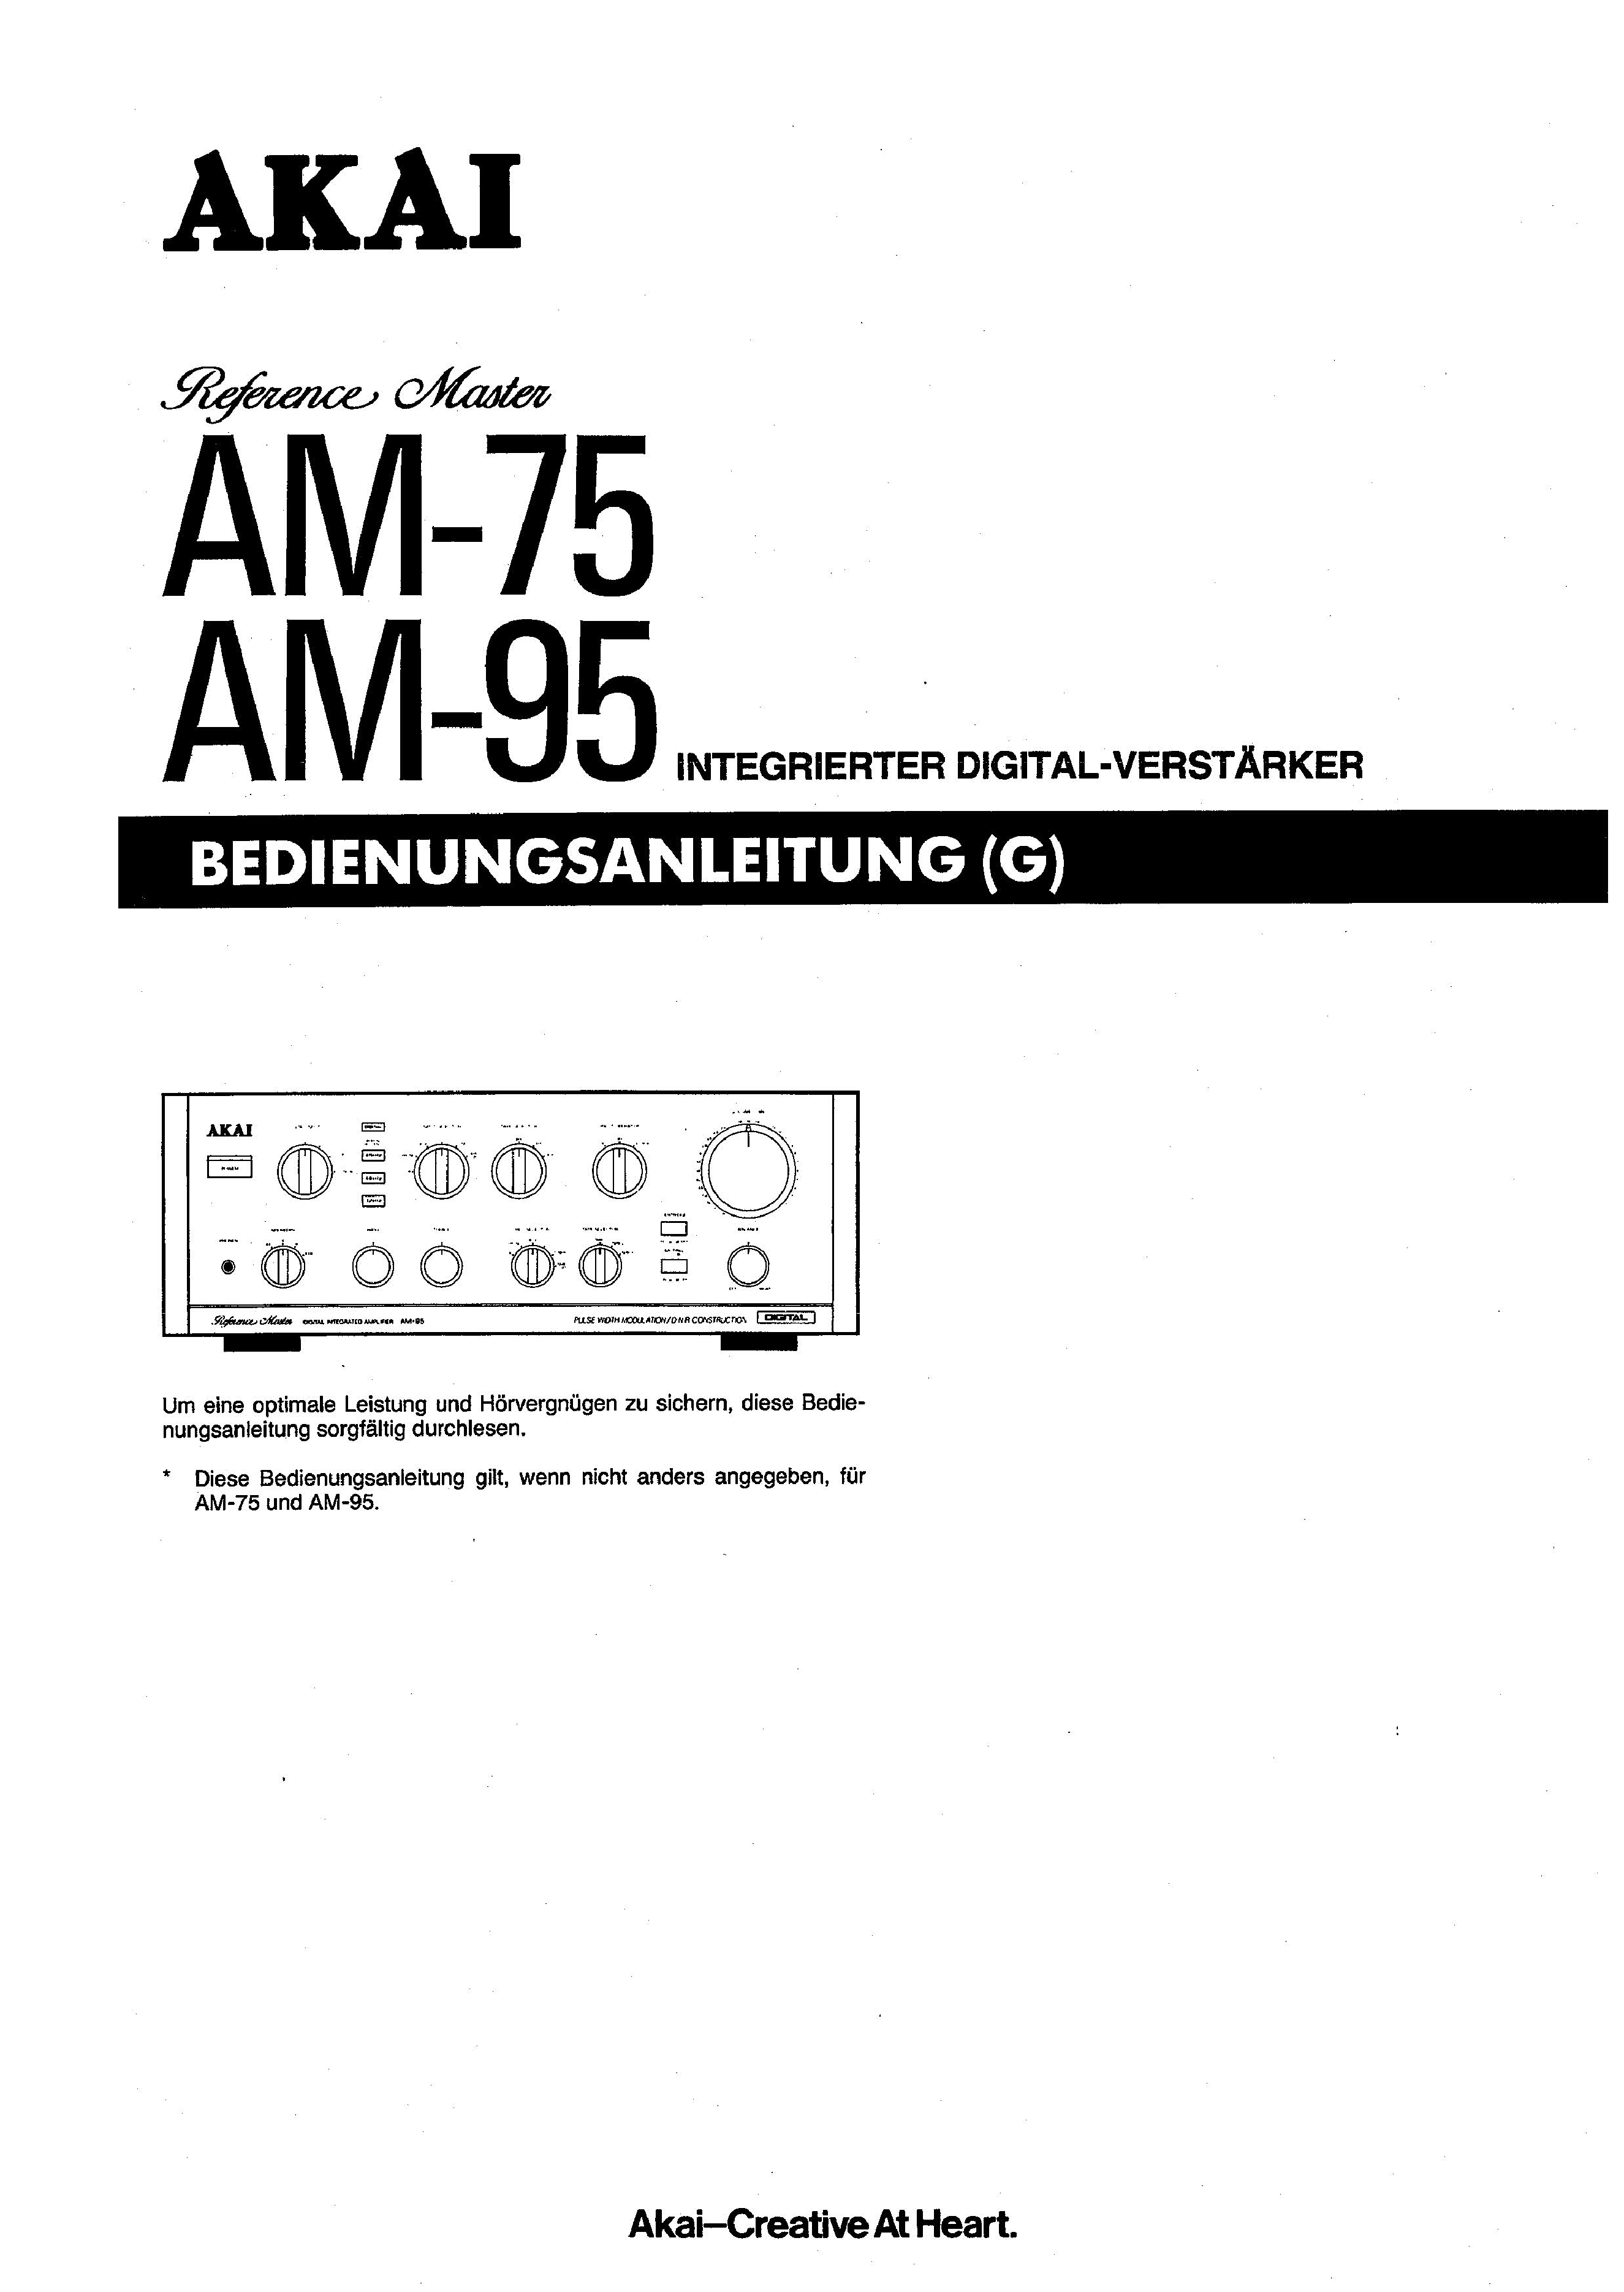 AKAI AM-95 - Owner's Manual Immediate Download